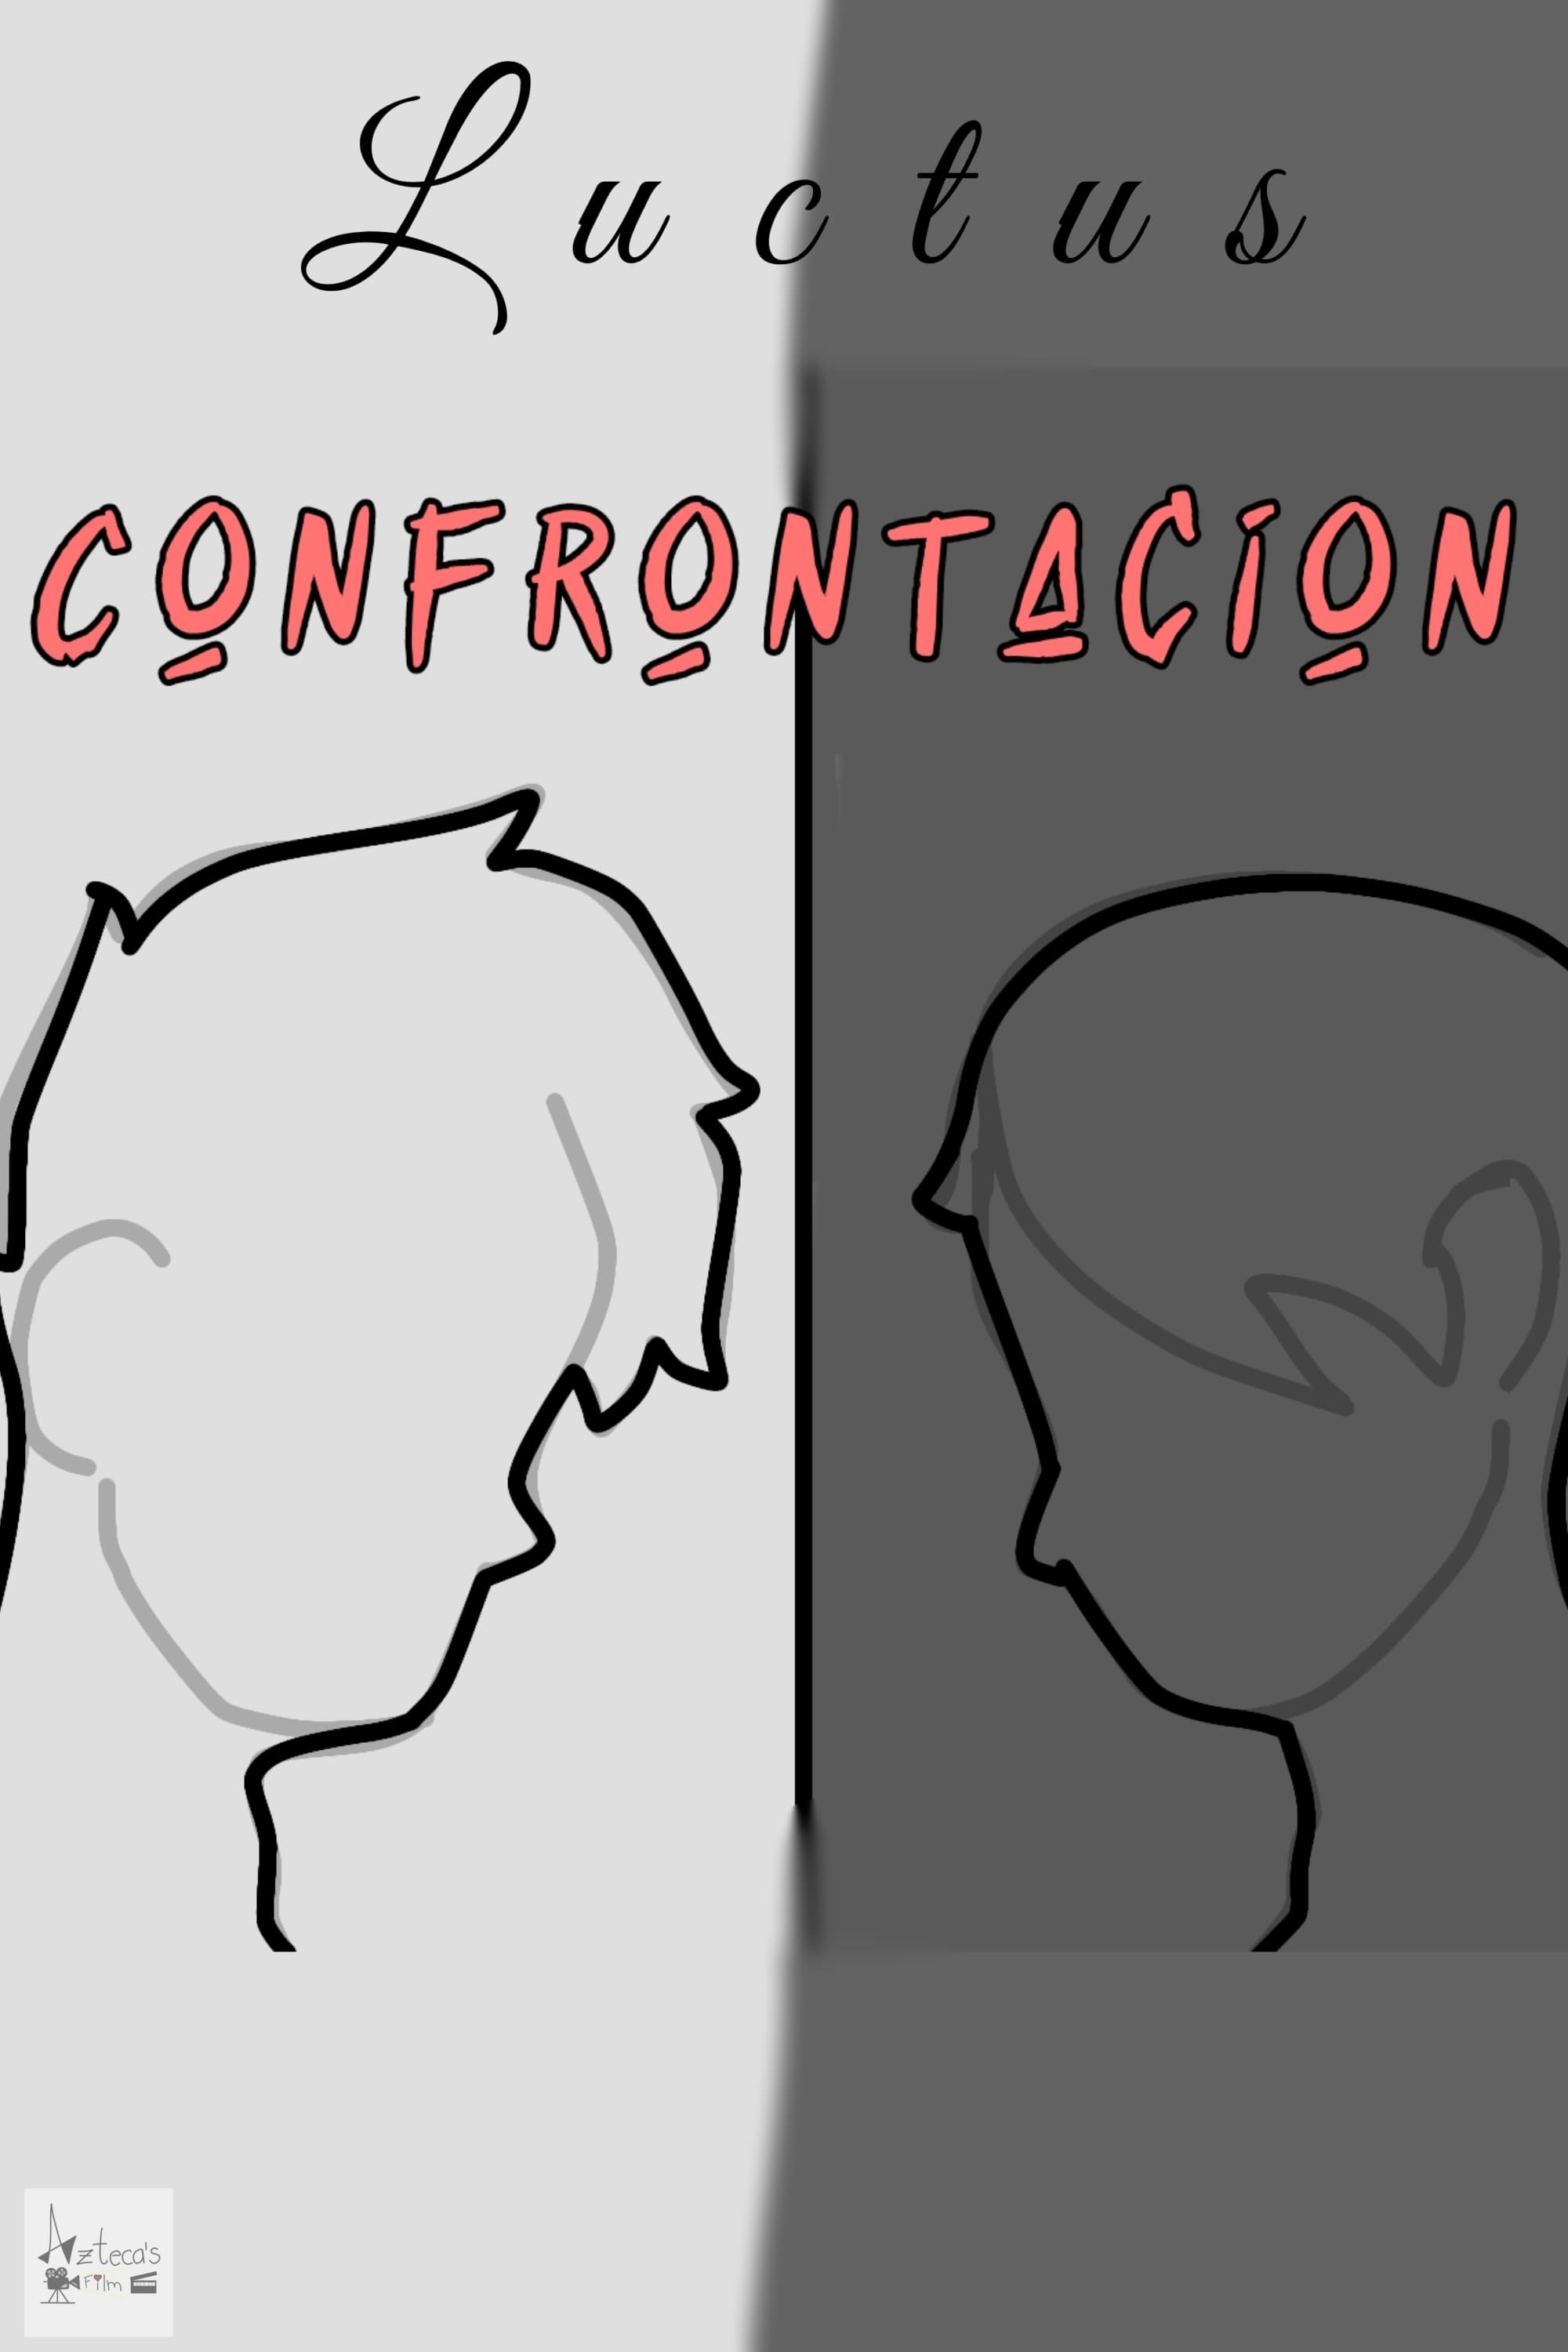 Confrontation